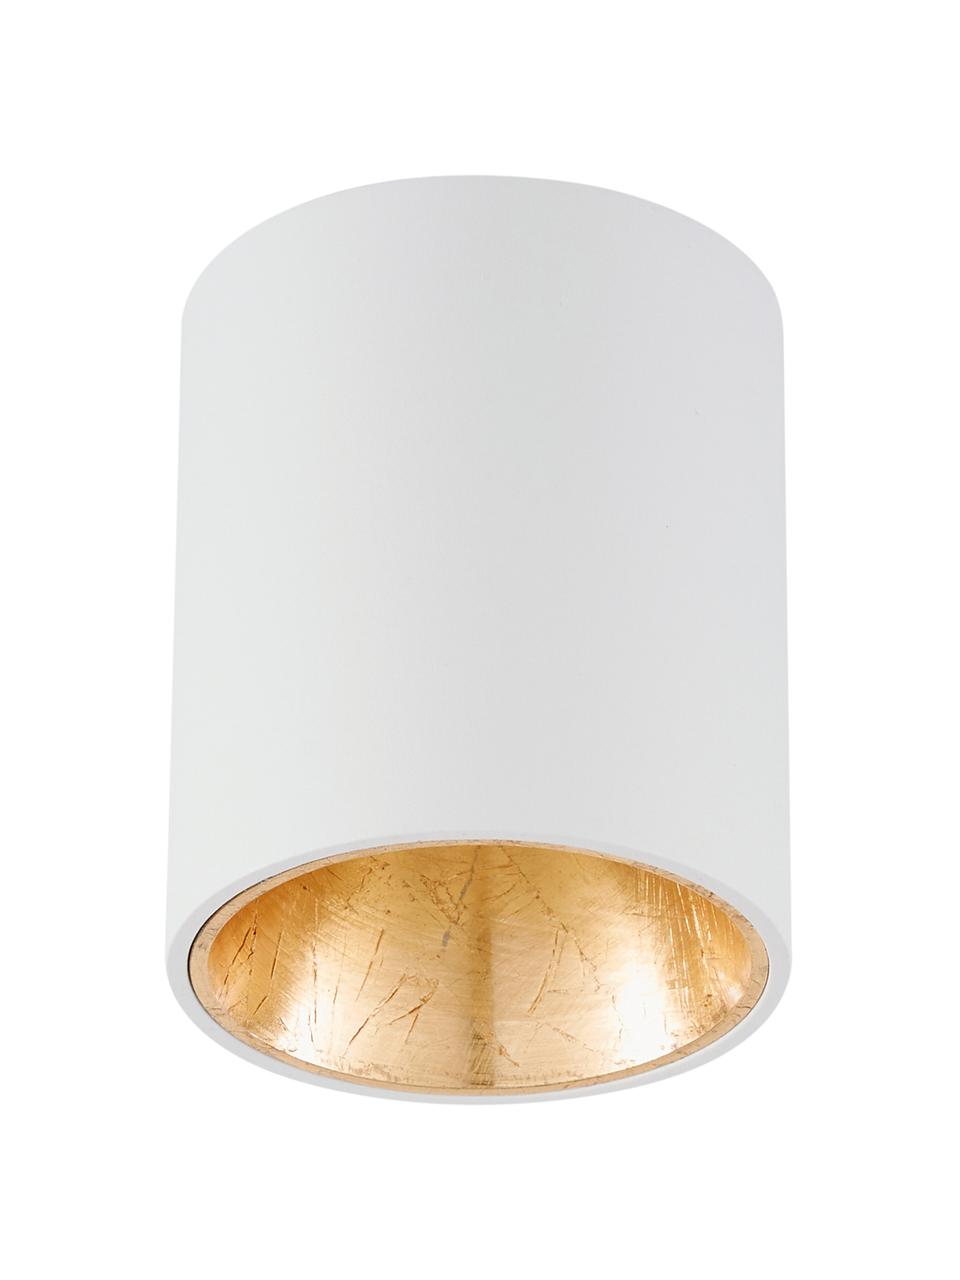 LED plafondspot Marty, Wit, goudkleurig, Ø 10 x H 12 cm